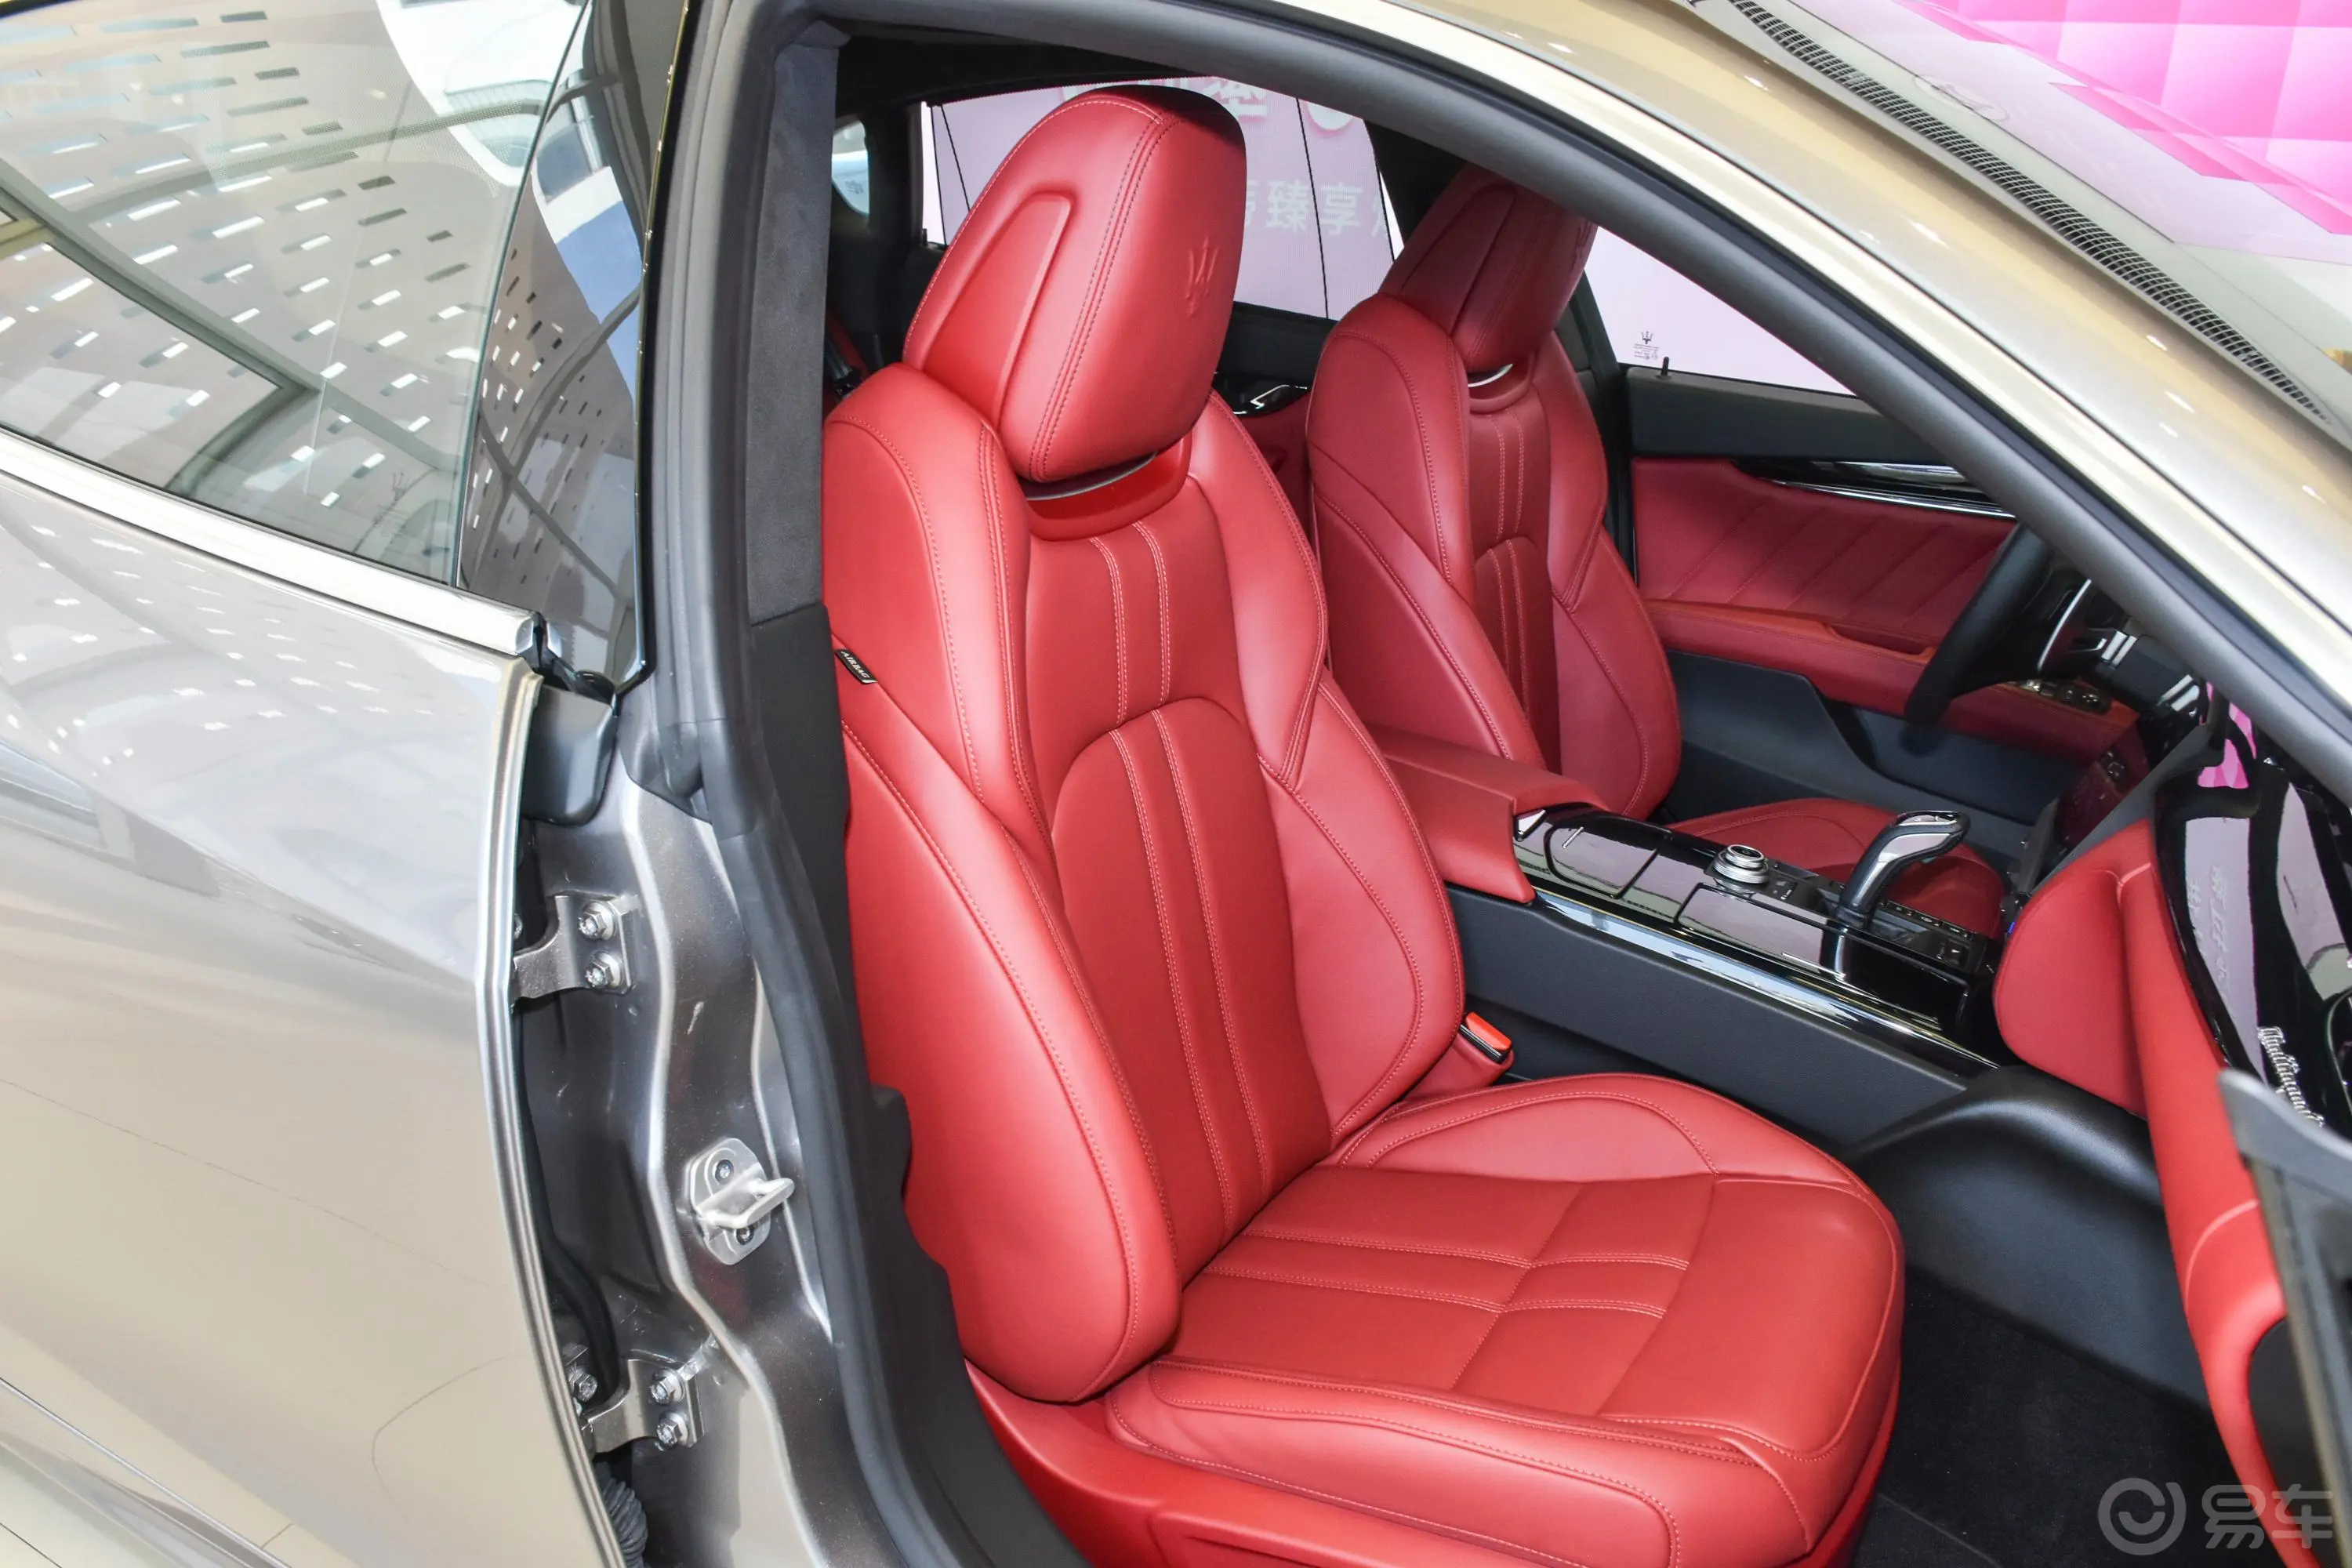 Quattroporte3.0T S Q4 豪华版副驾驶座椅